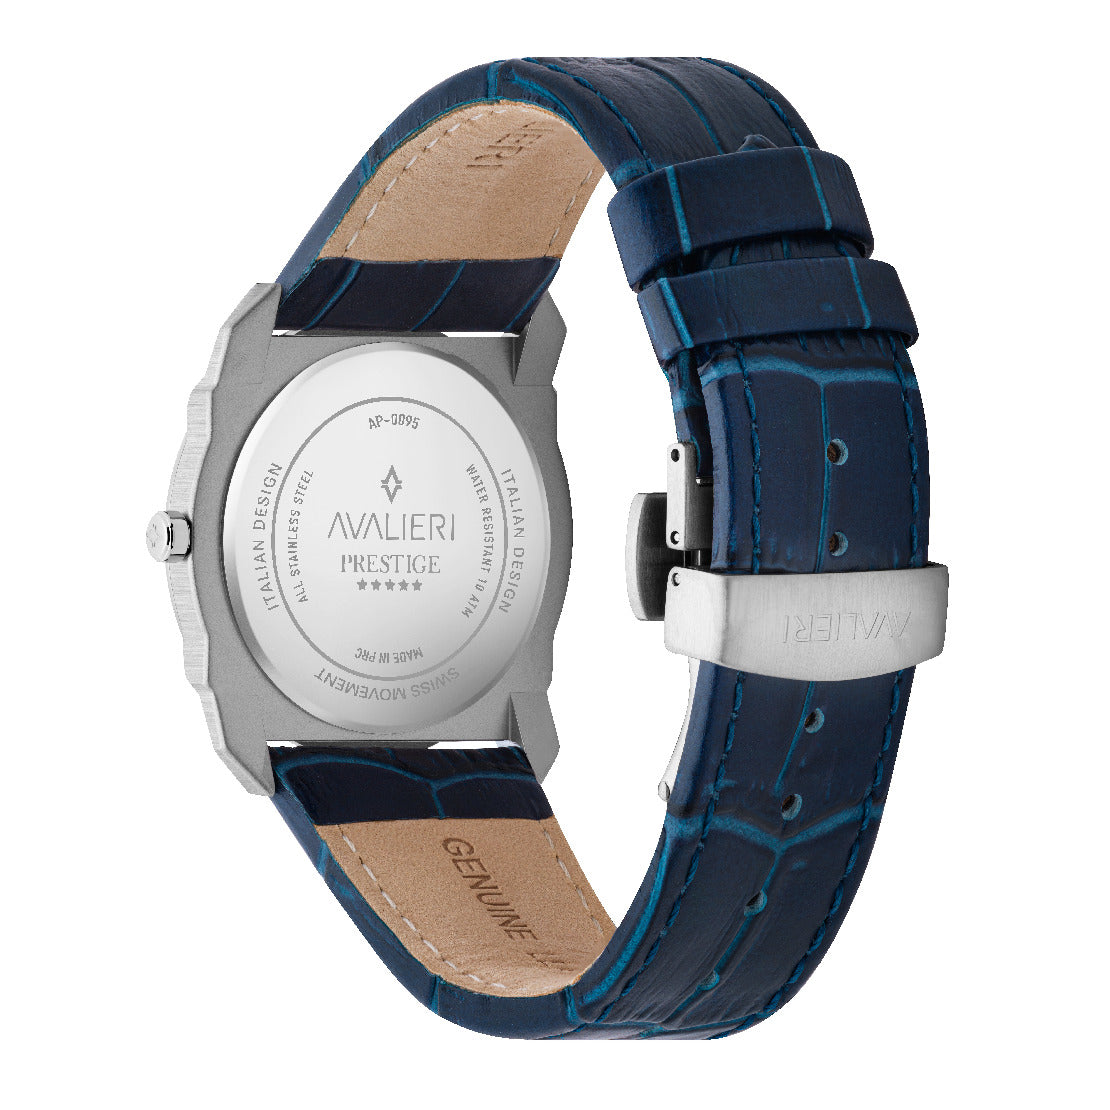 Avalieri Prestige Men's Watch, Swiss Quartz Movement, Silver White Dial - AP-0095